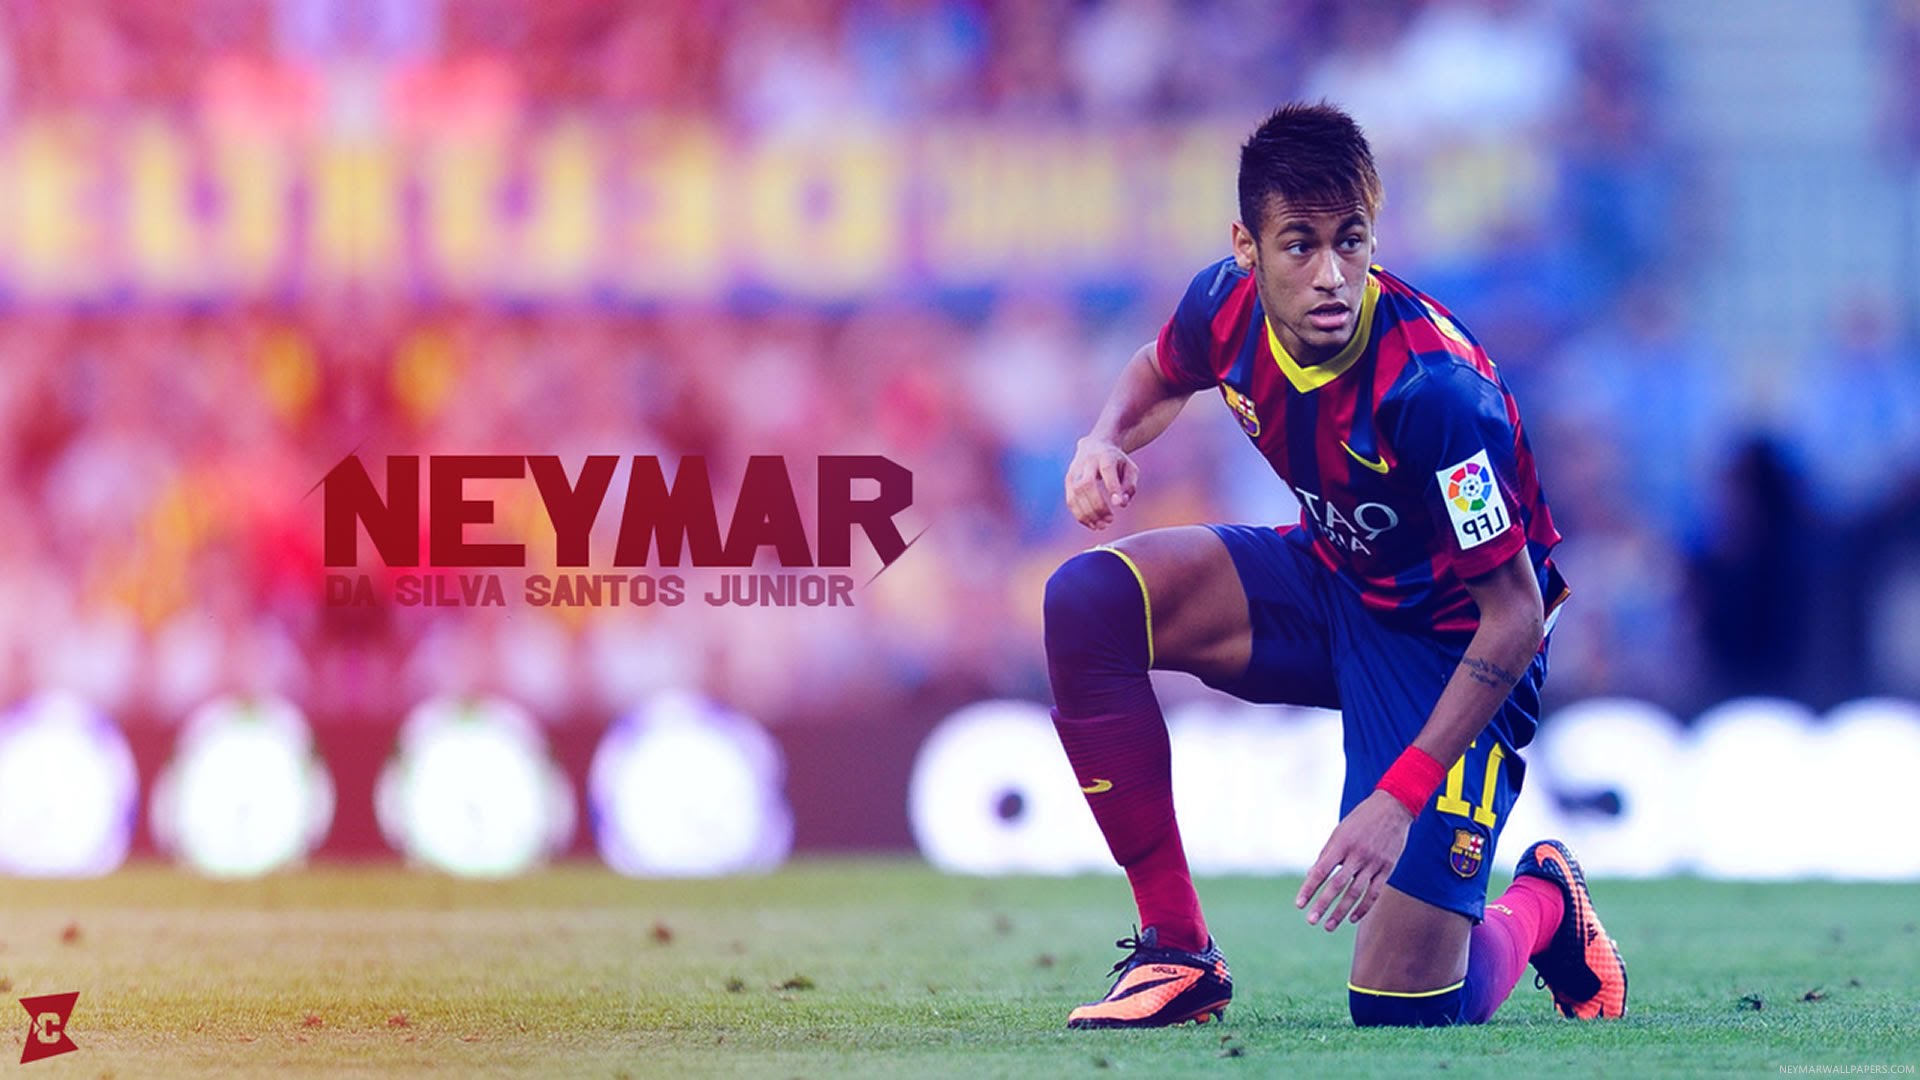 Barcelona Neymar HD Wallpaper 1080p